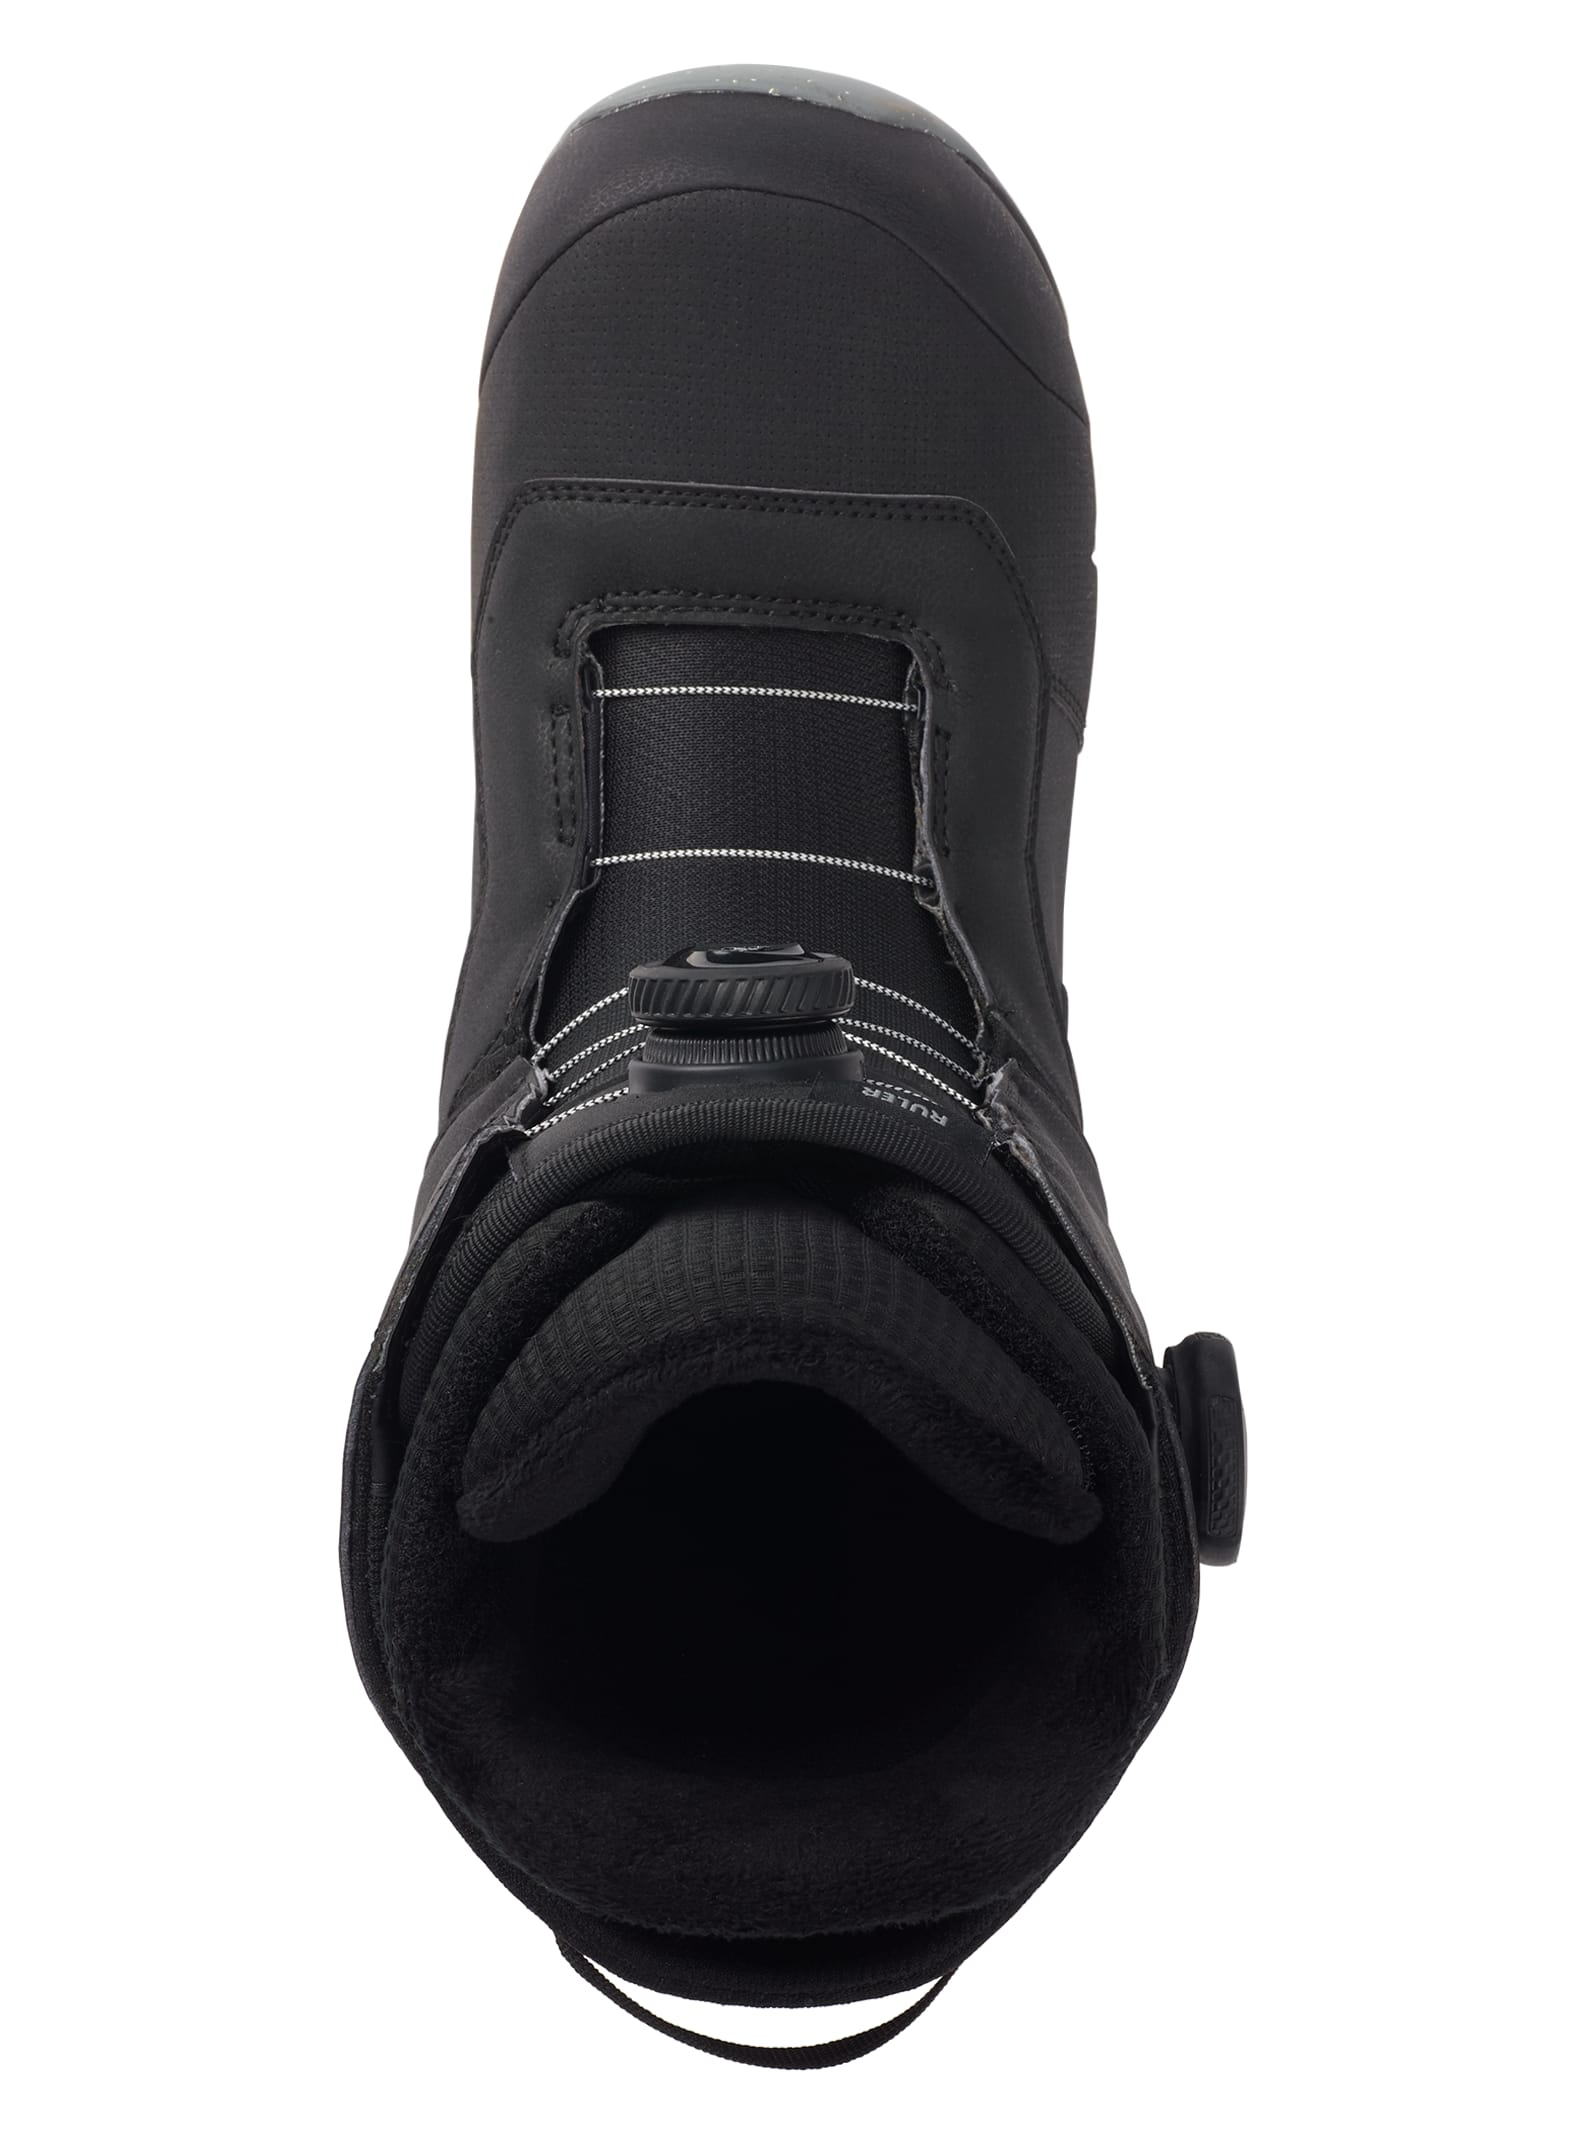 Burton Men's Burton Ruler BOA® Snowboard Boots Black